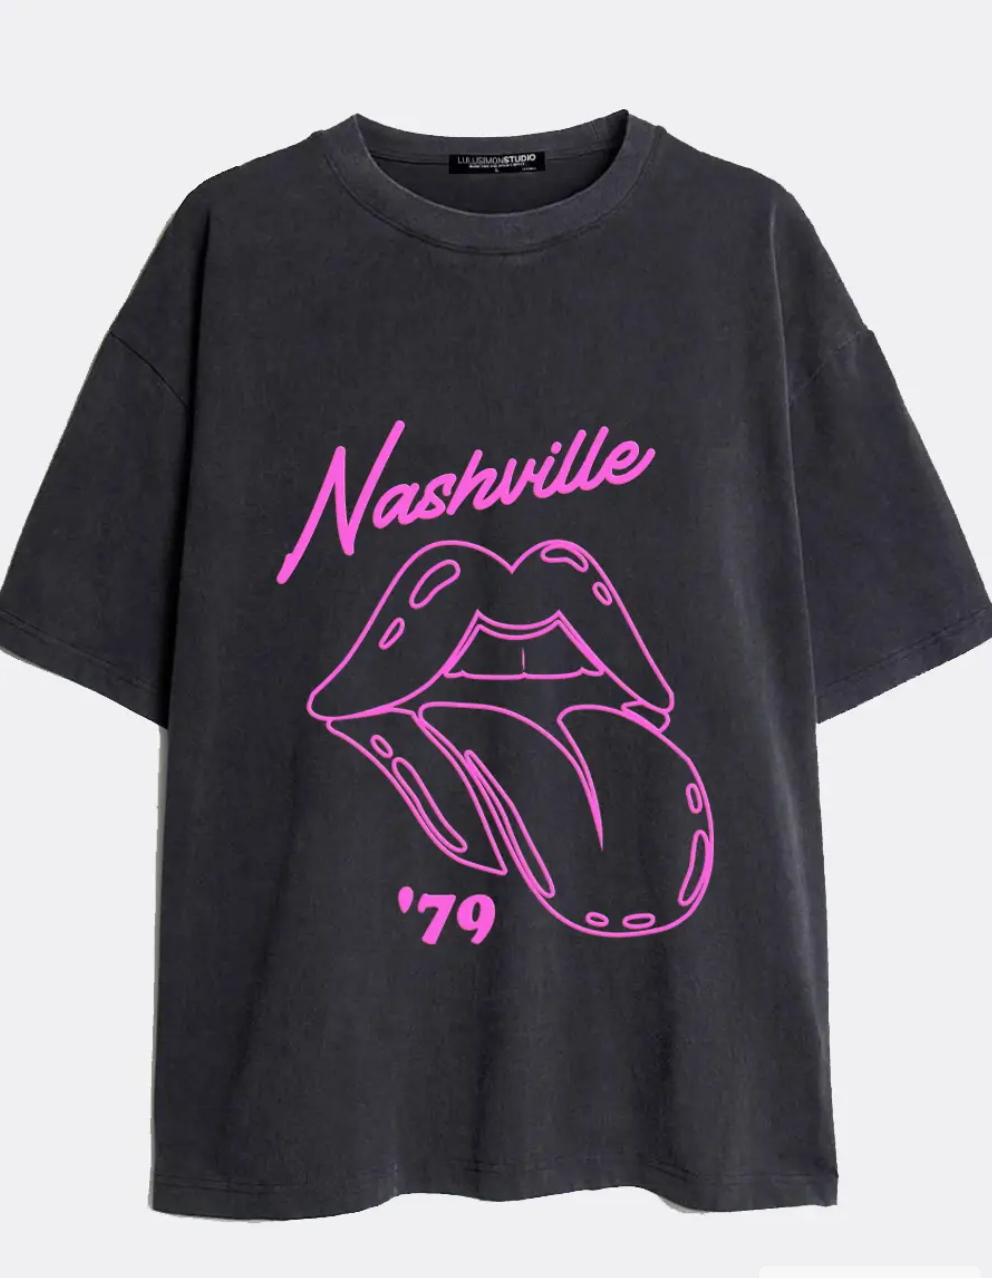 Nashville Lips 1979 Pigment Dye Tee